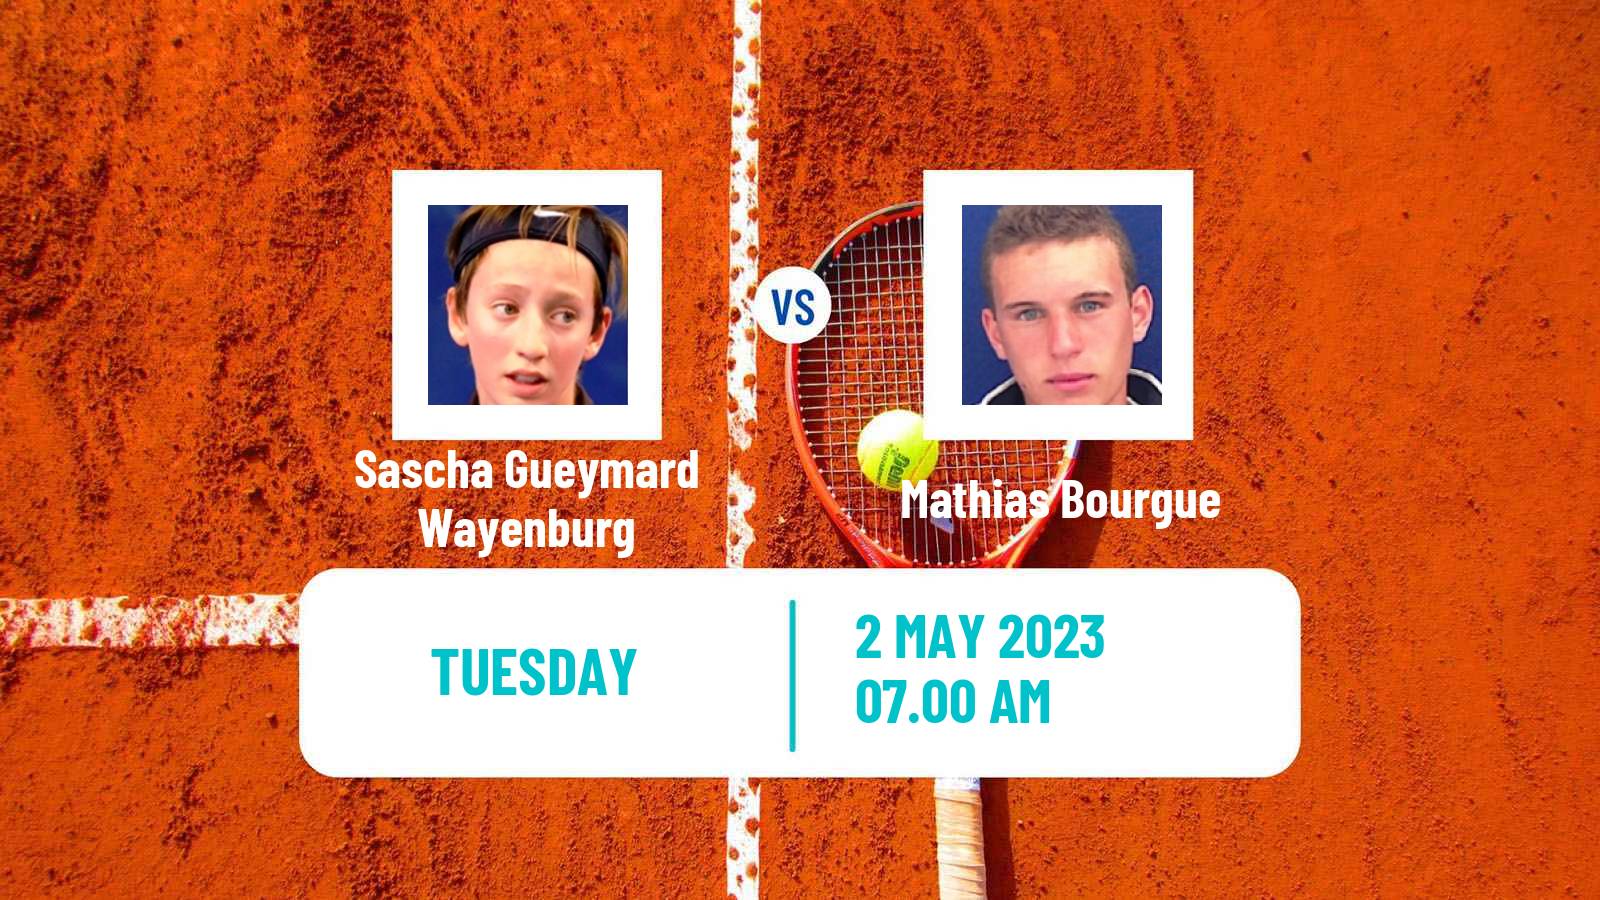 Tennis ITF Tournaments Sascha Gueymard Wayenburg - Mathias Bourgue